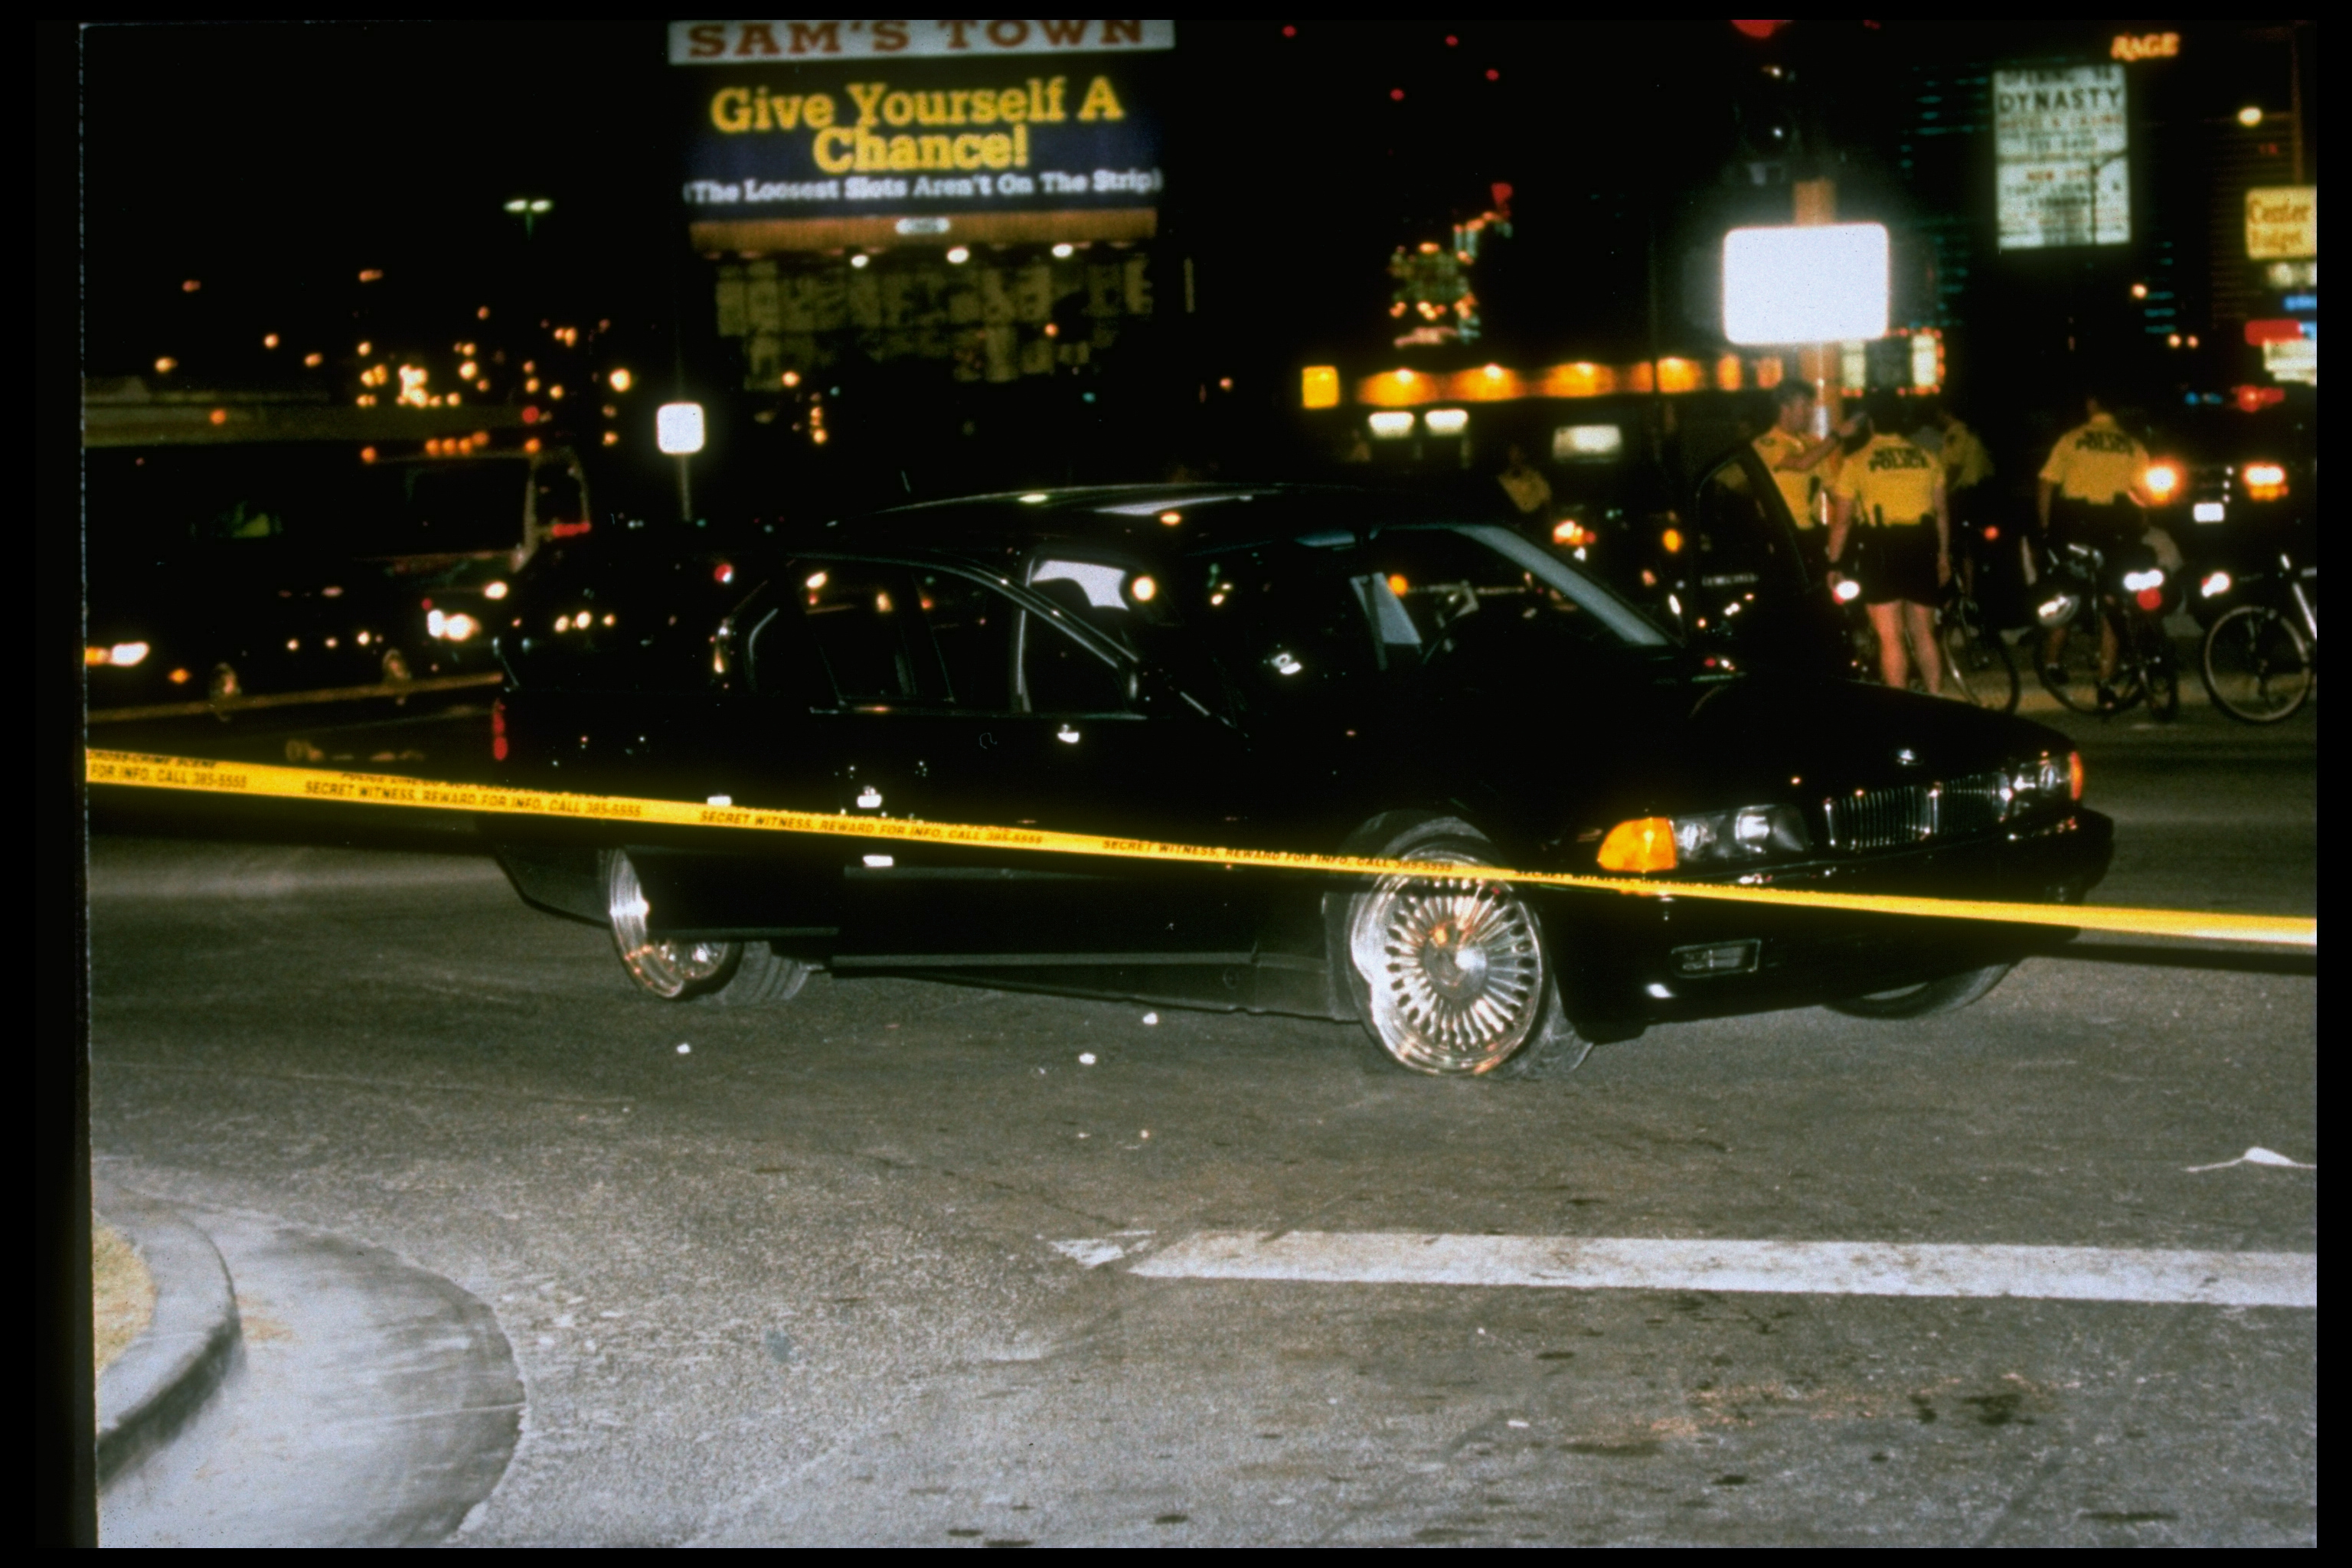  Car Tupac Shakur was shot in